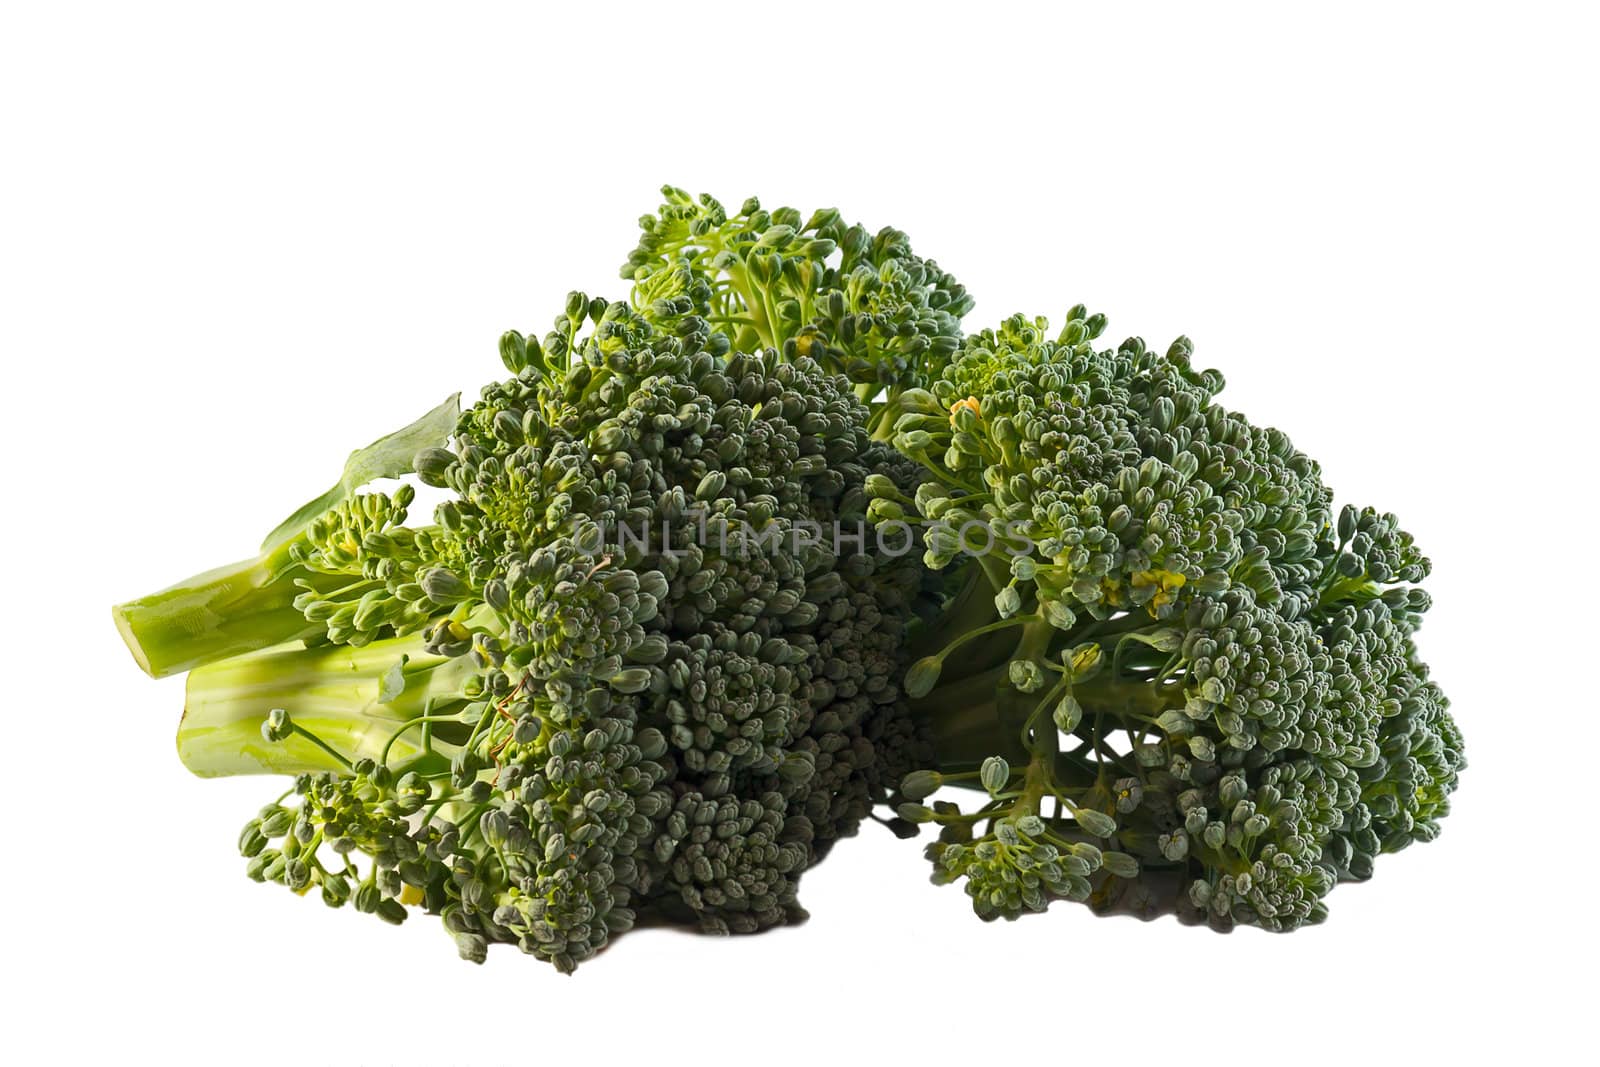 Broccoli close-up, isolated on white background.